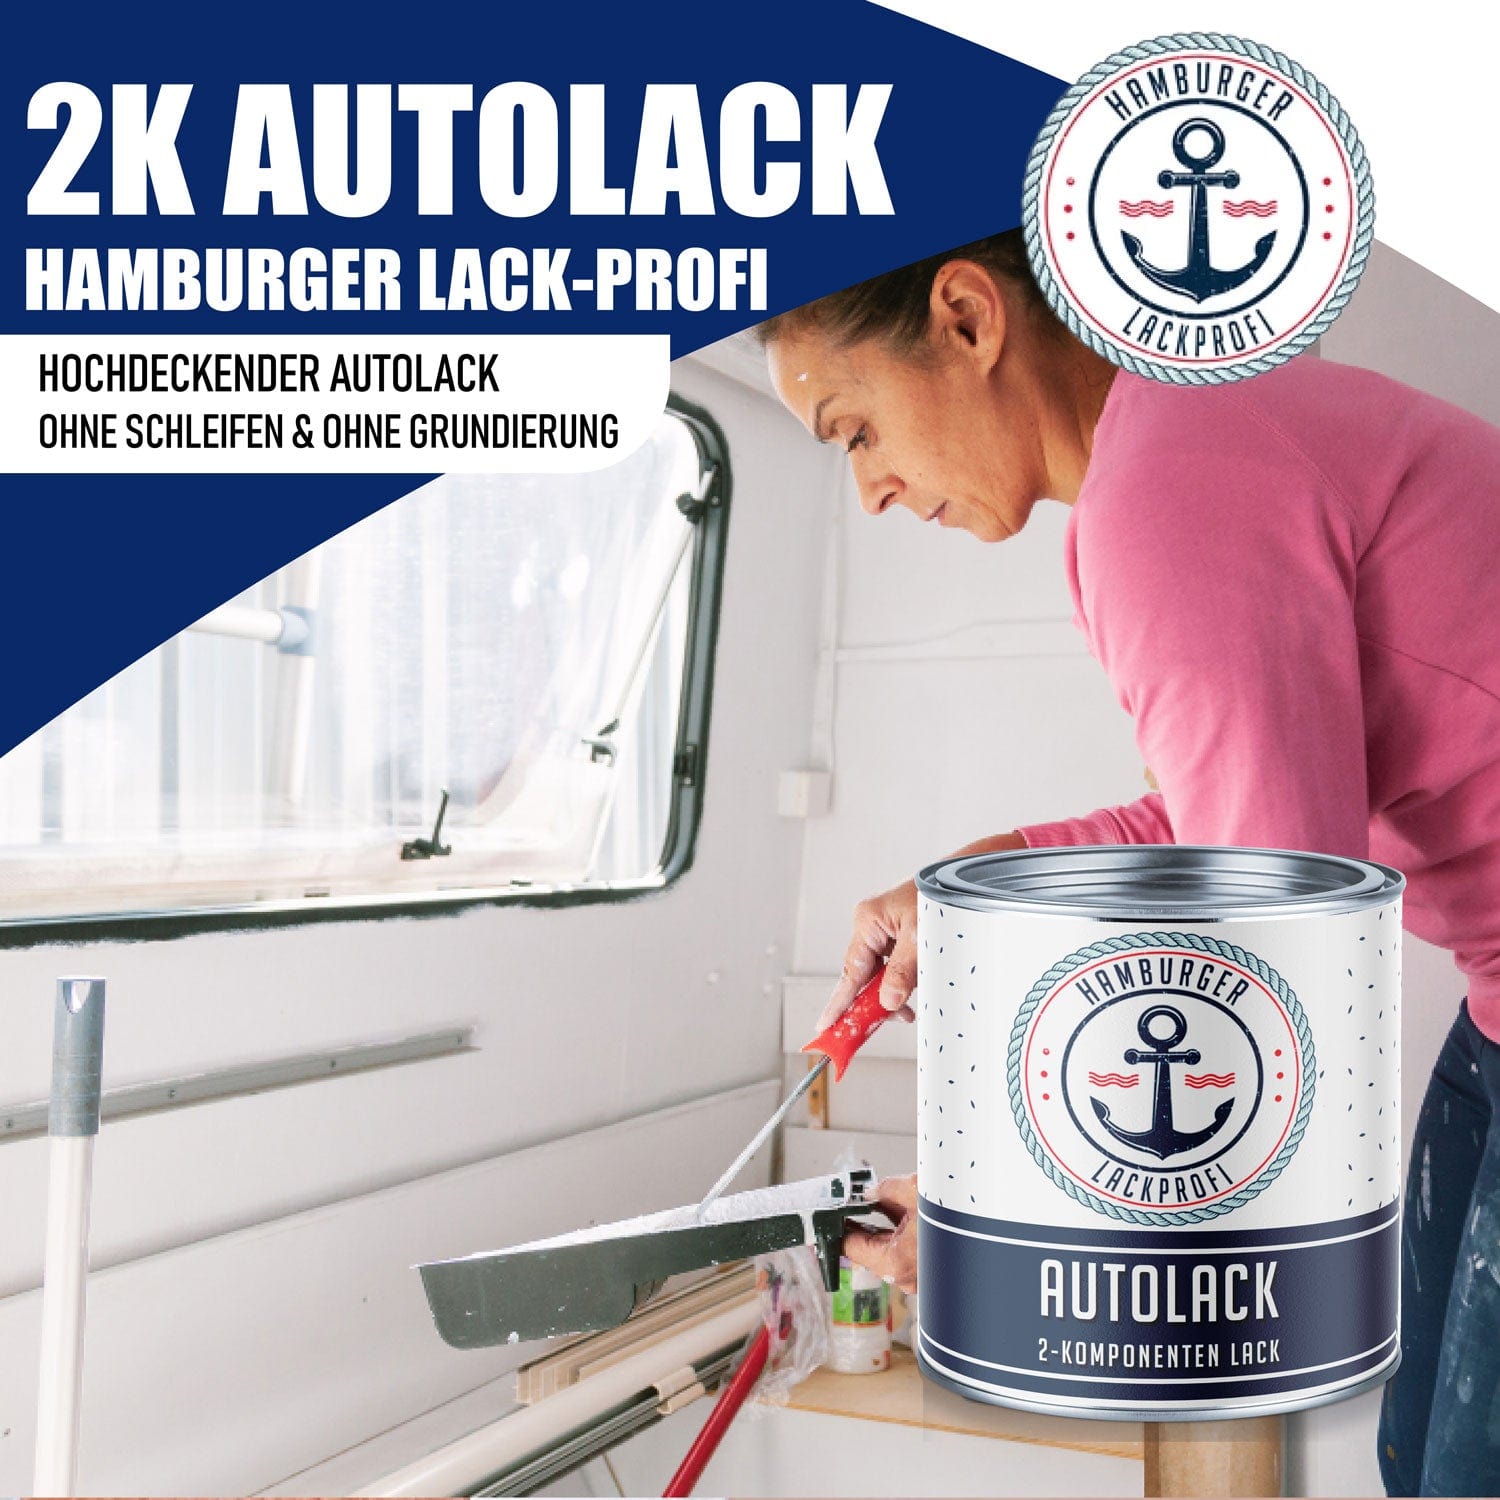 Hamburger Lack-Profi Lacke & Beschichtungen Hamburger Lack-Profi 2K Autolack in Türkisgrün RAL 6016 mit Lackierset (X300) & Verdünnung (1 L) - 30% Sparangebot